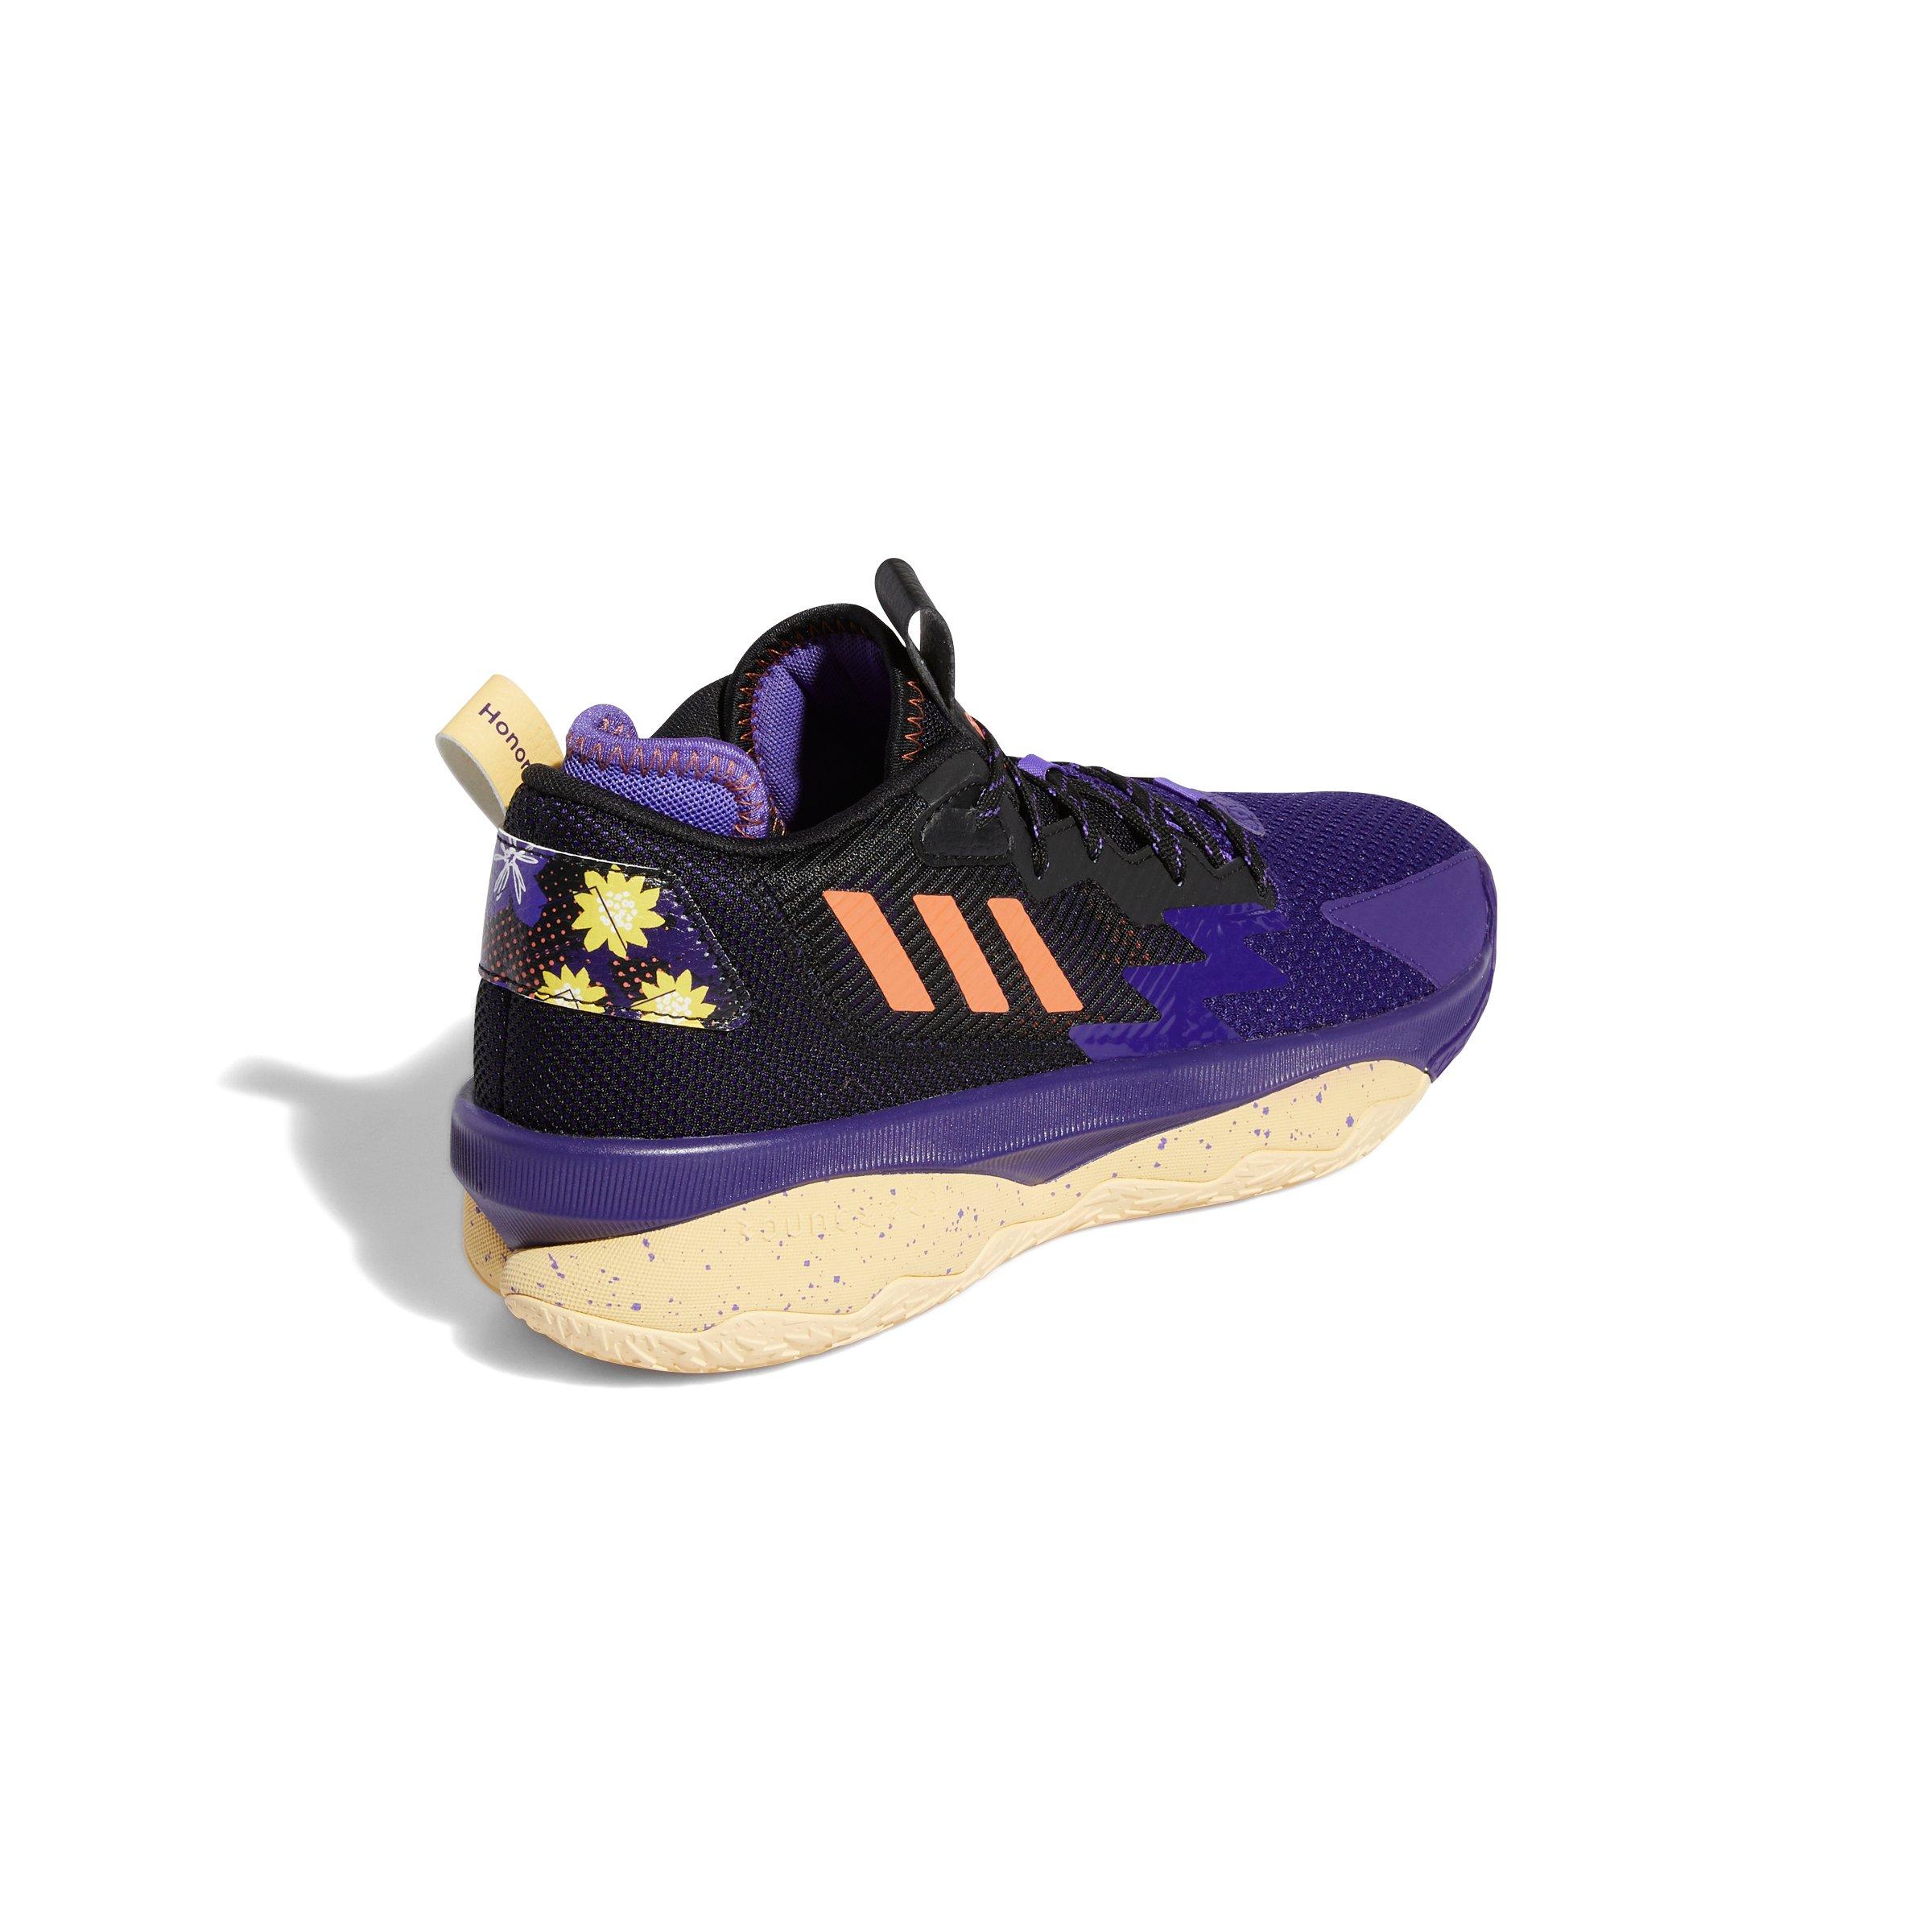 Tegenwerken Verwaand Dreigend adidas Dame 8 "Purple/Black/Orange" Men's Basketball Shoe